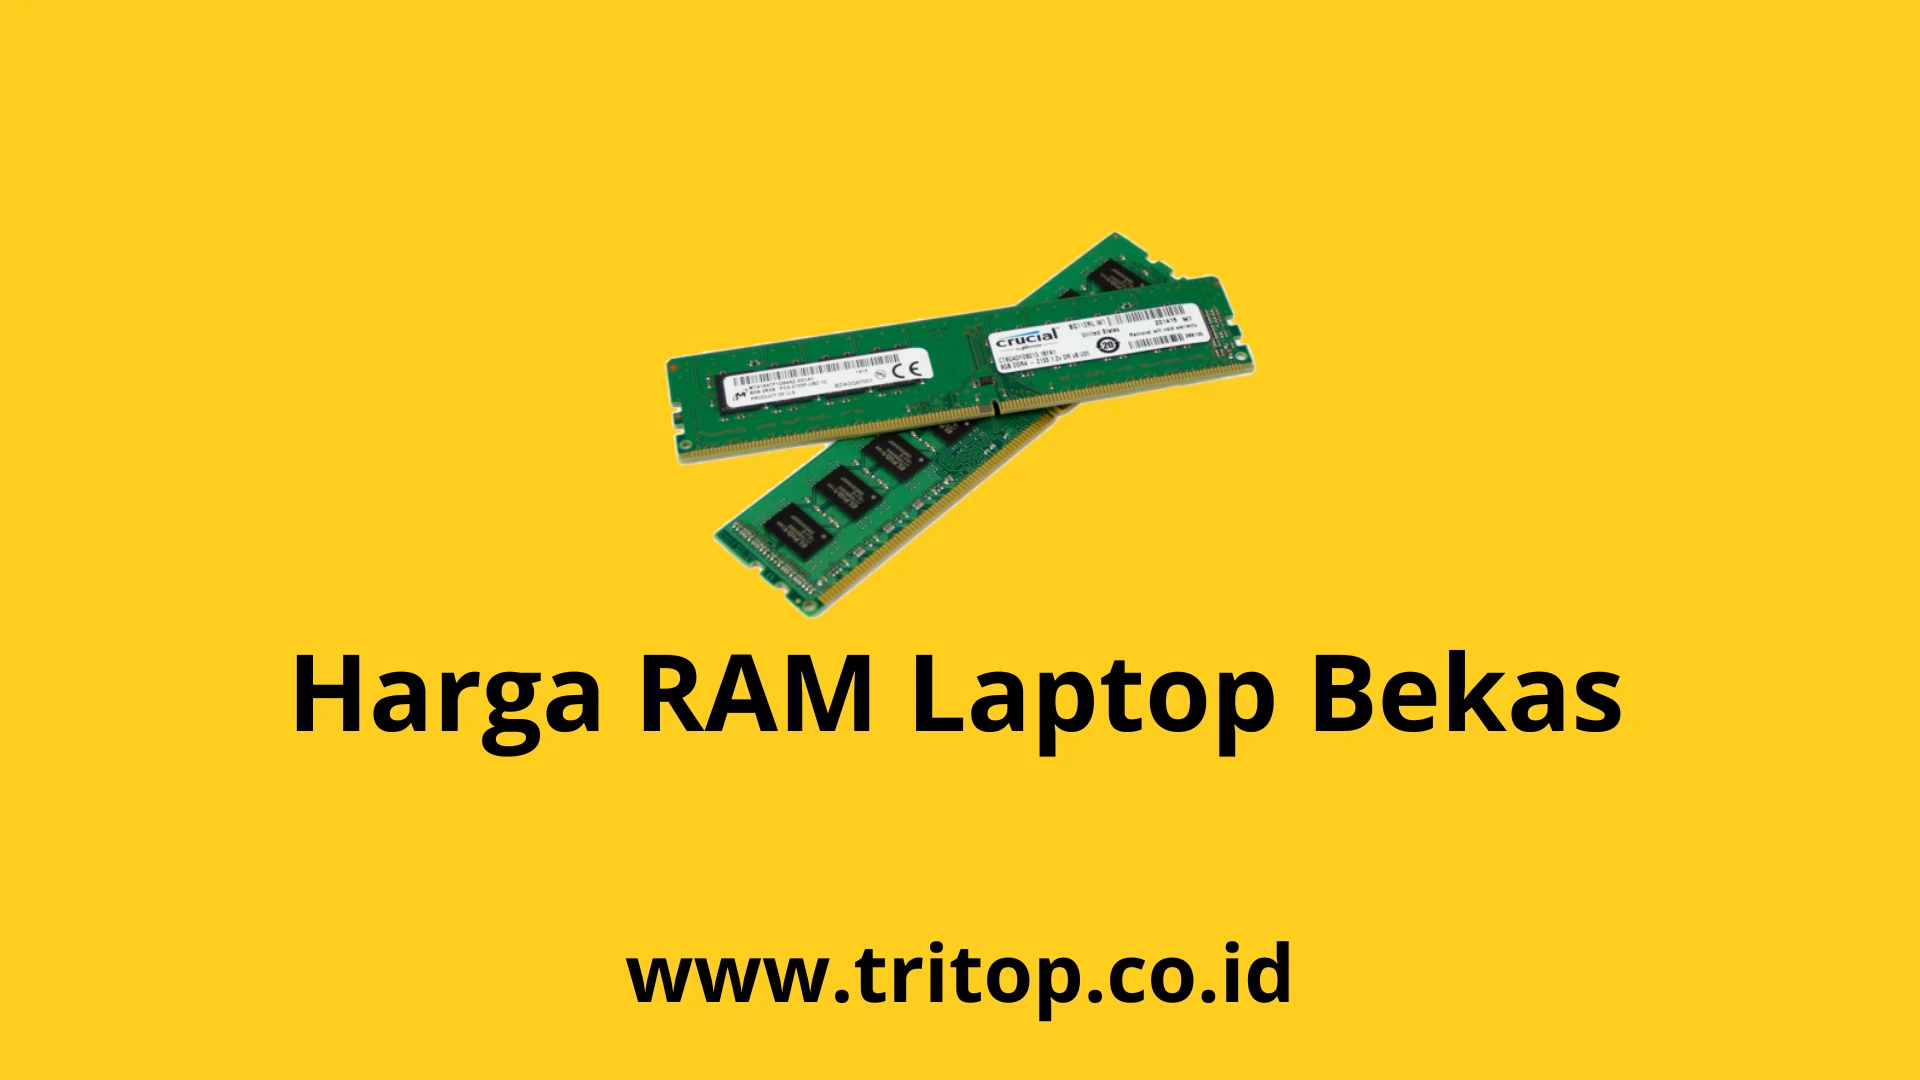 Harga RAM Laptop Bekas www.tritop.co.id~1